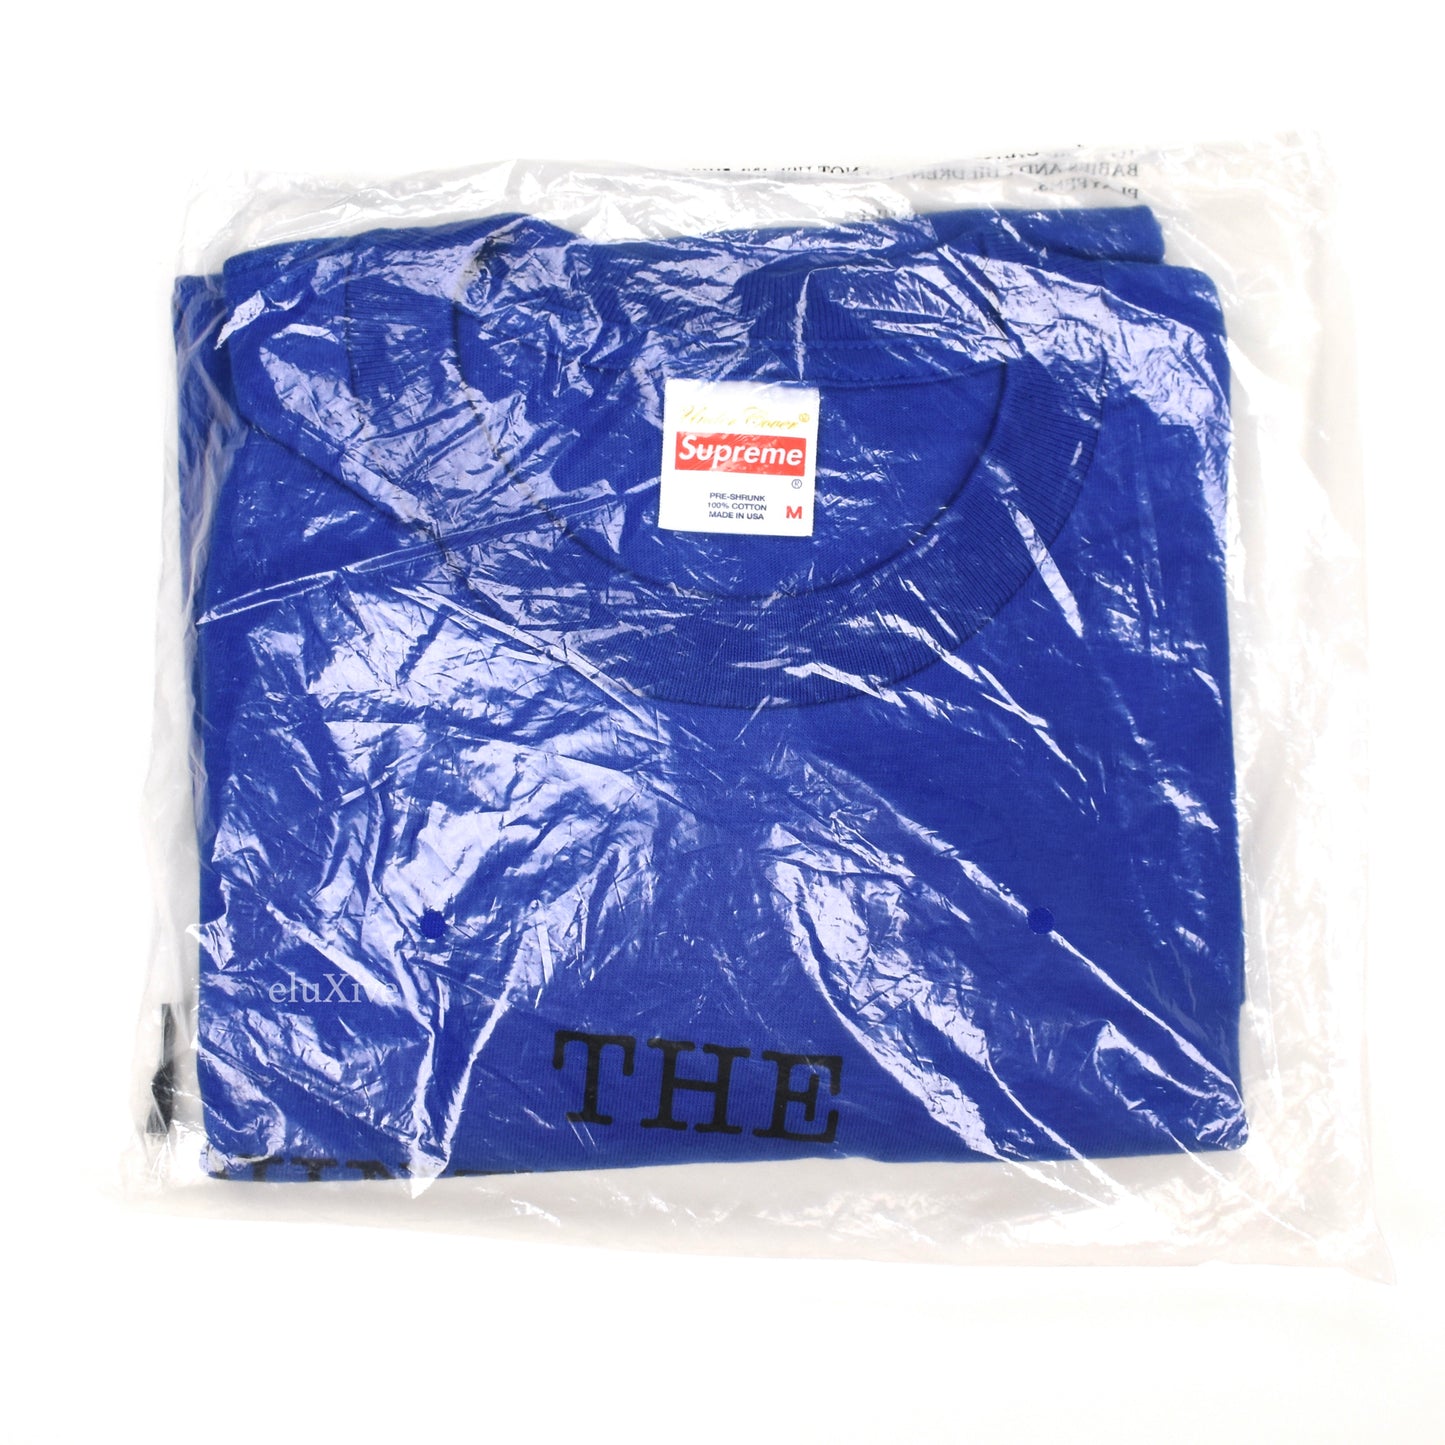 Supreme x Undercover x Public Enemy - Counterattack L/S T-Shirt (Blue)